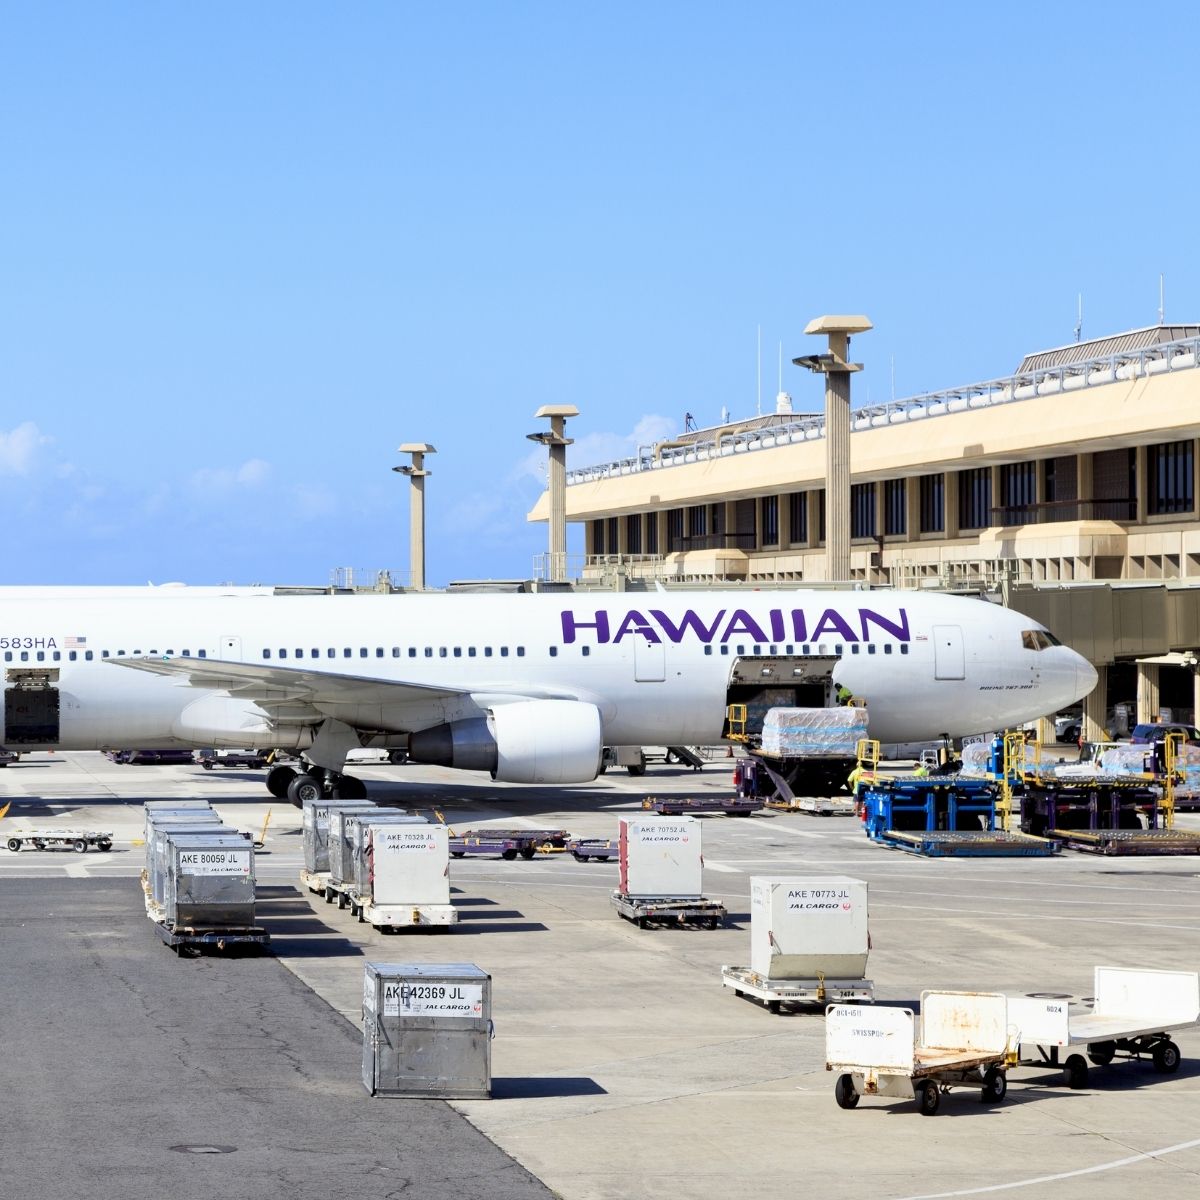 Hawaii airlines airplane at Honolulu airport